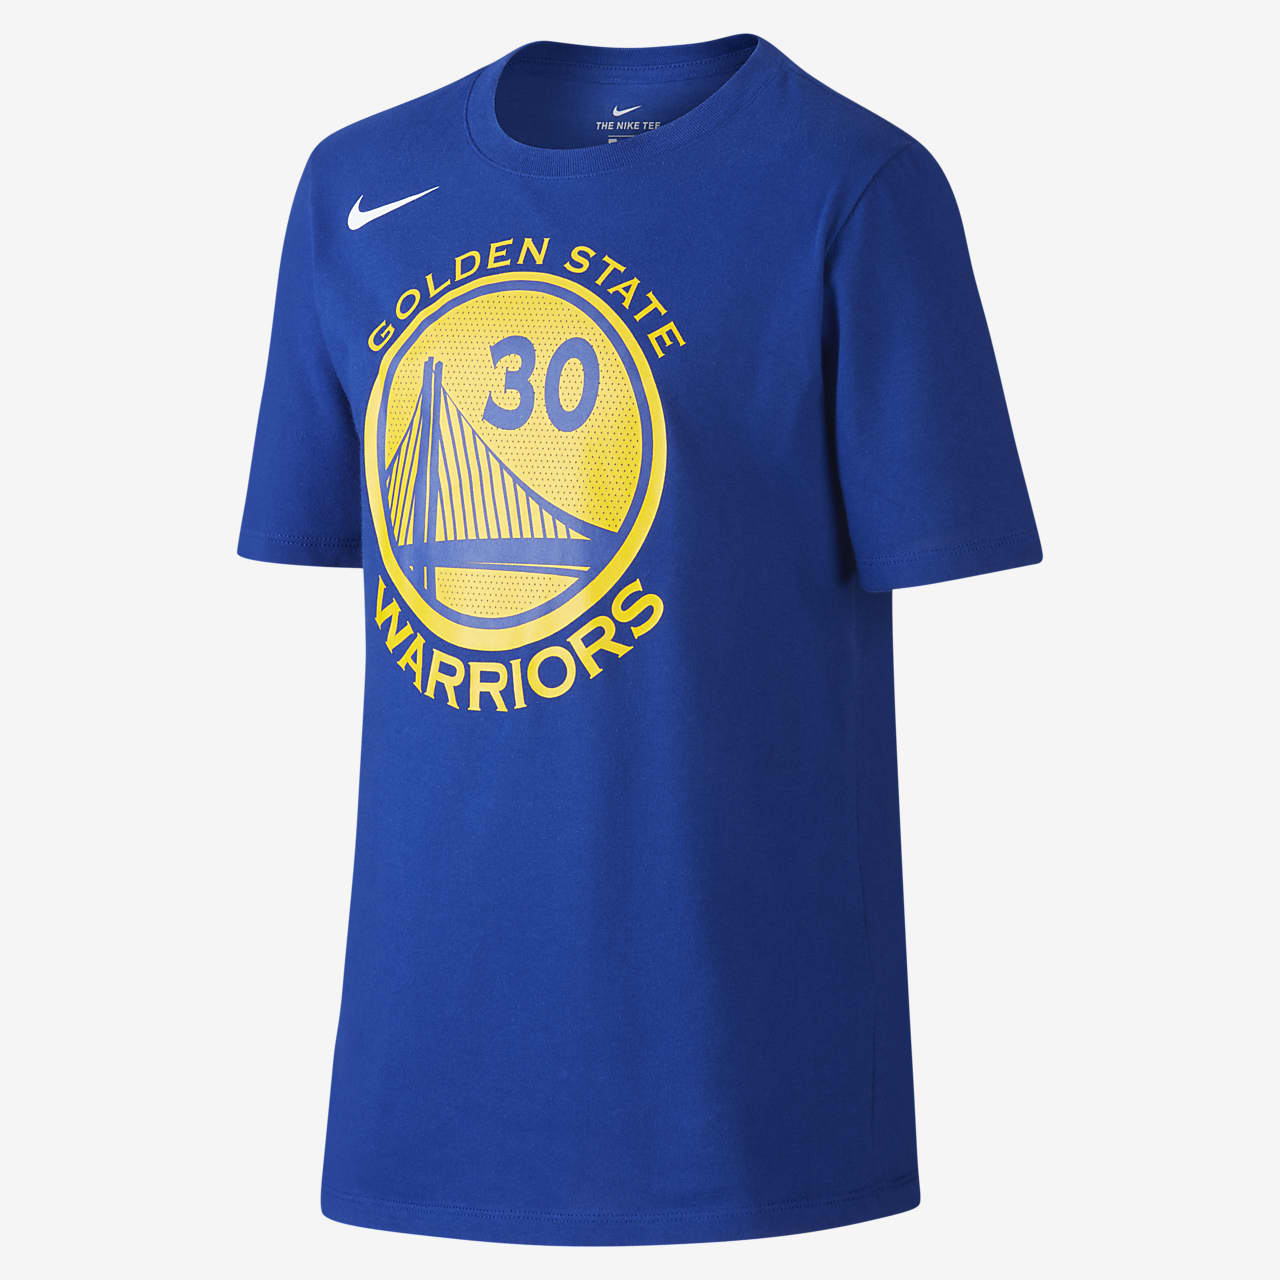 Nike Icon NBA Warriors (Curry 